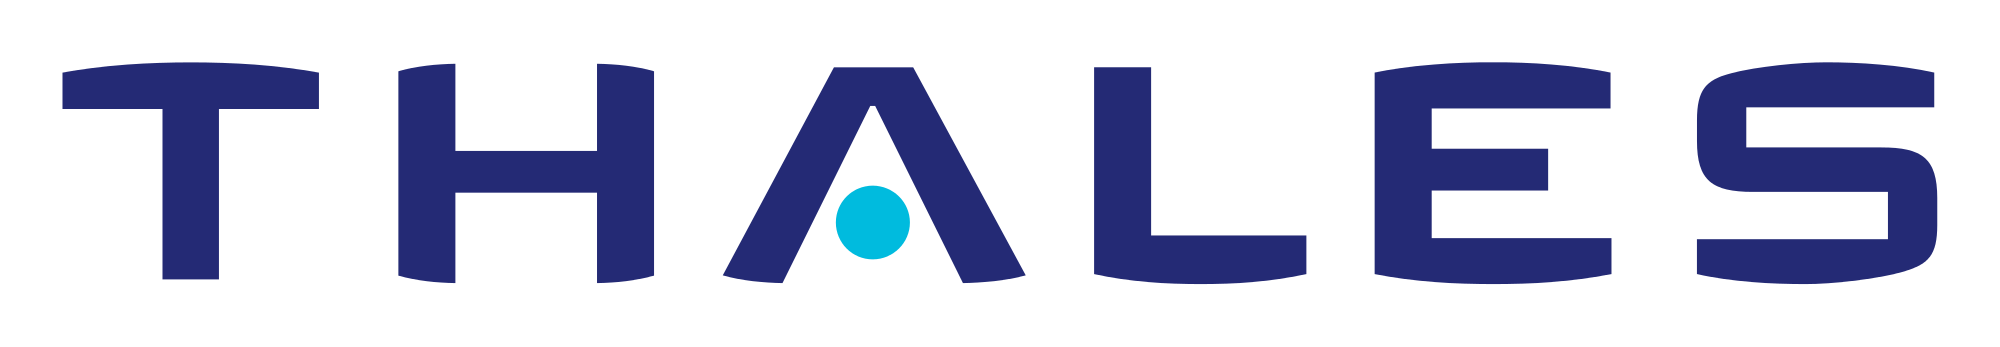 Thales_Logo.png